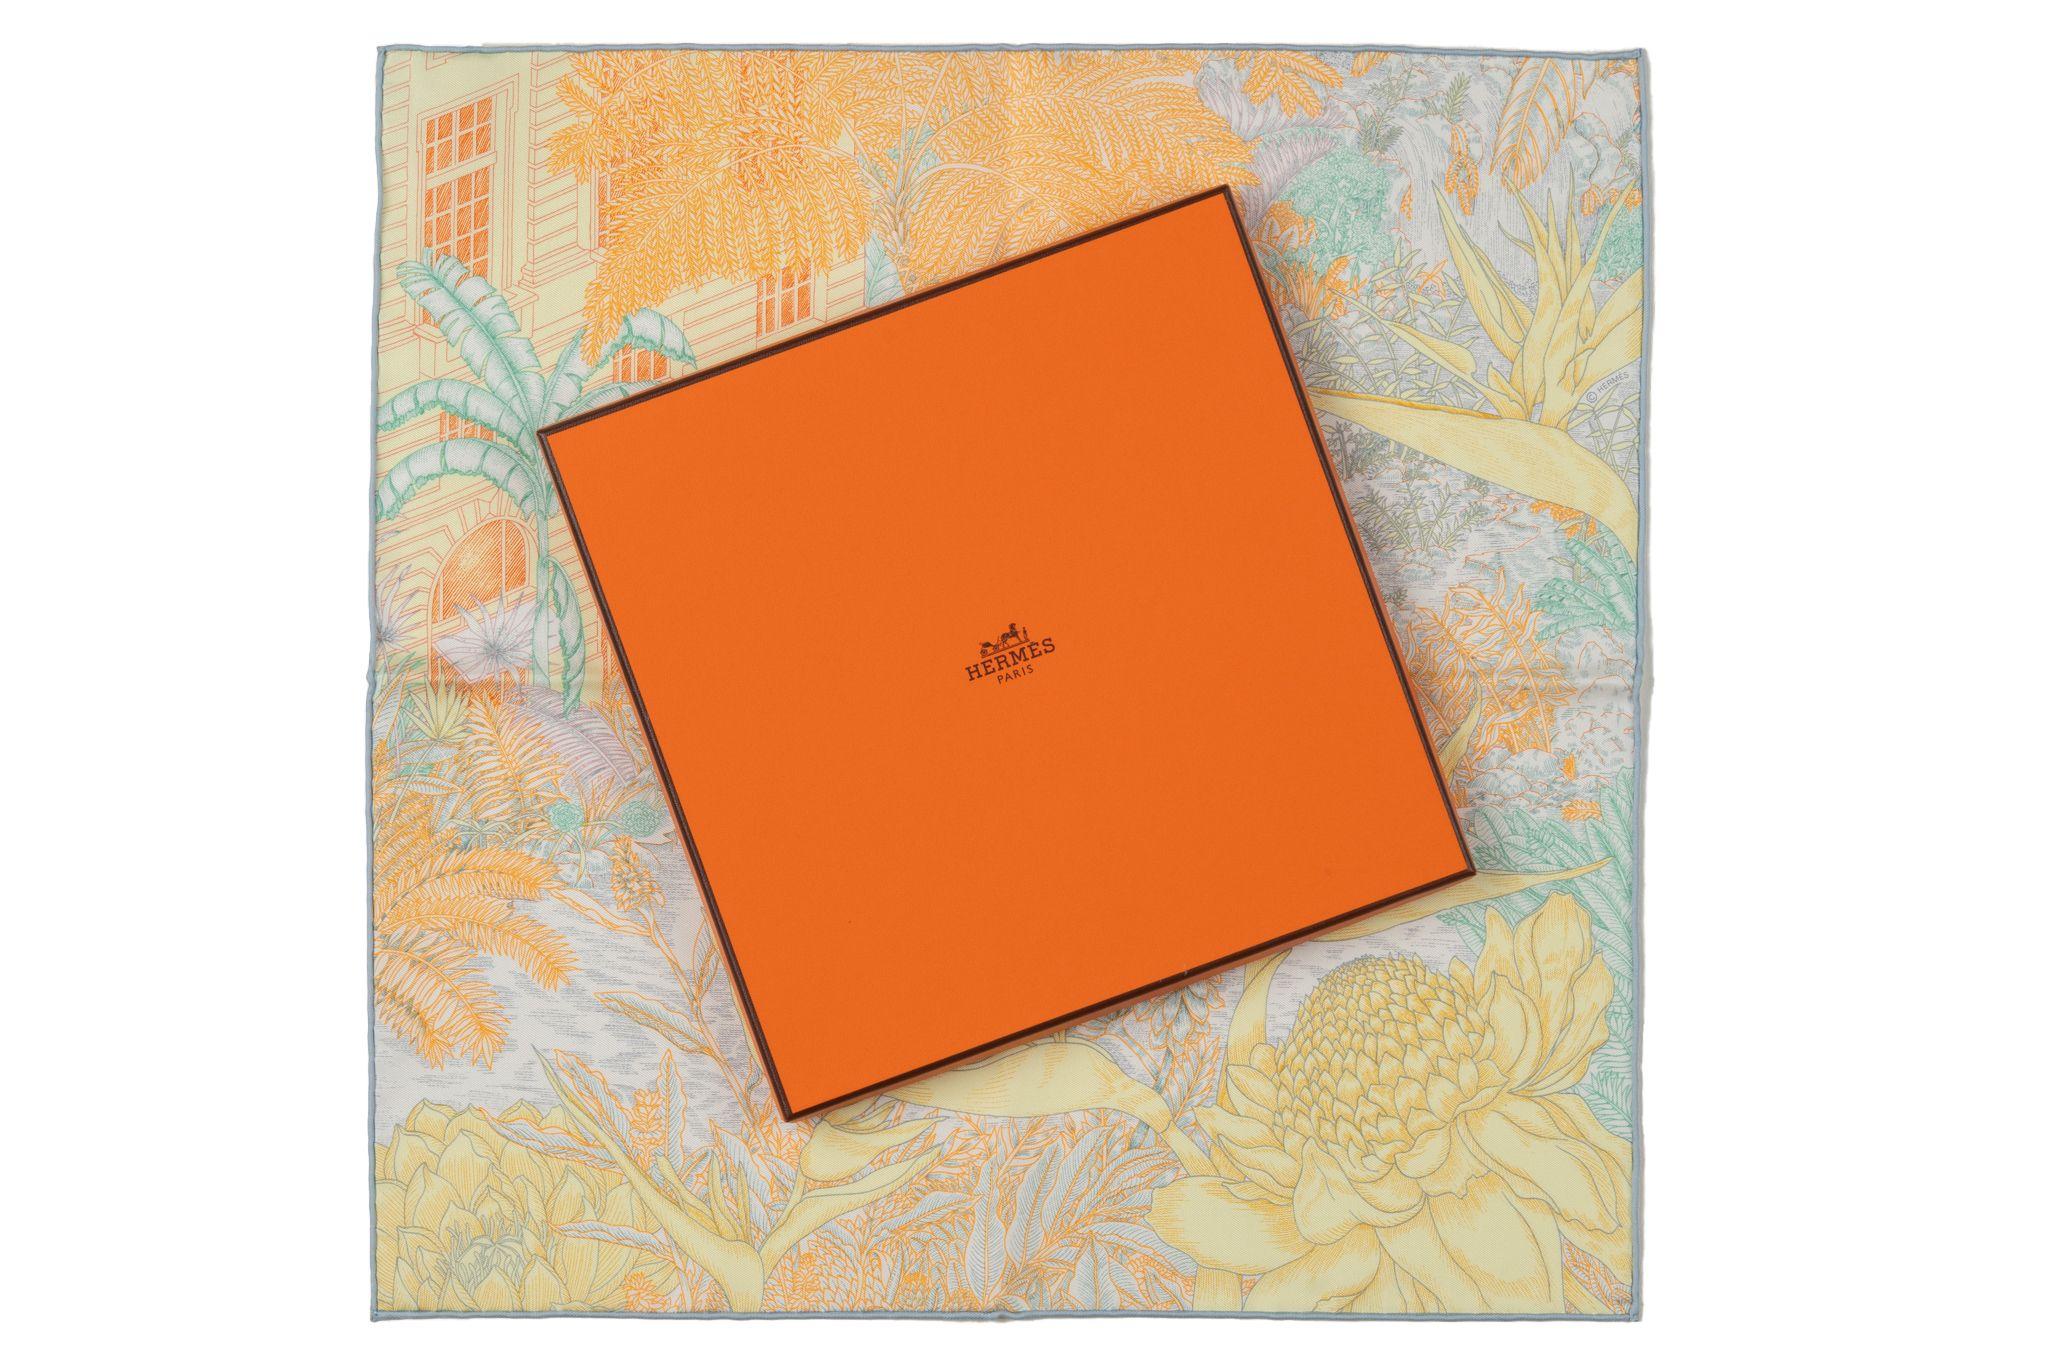 Hermès brand new in box tropical garden orange yellow silk gavroche. Hand-rolled edges. Comes with original box. 